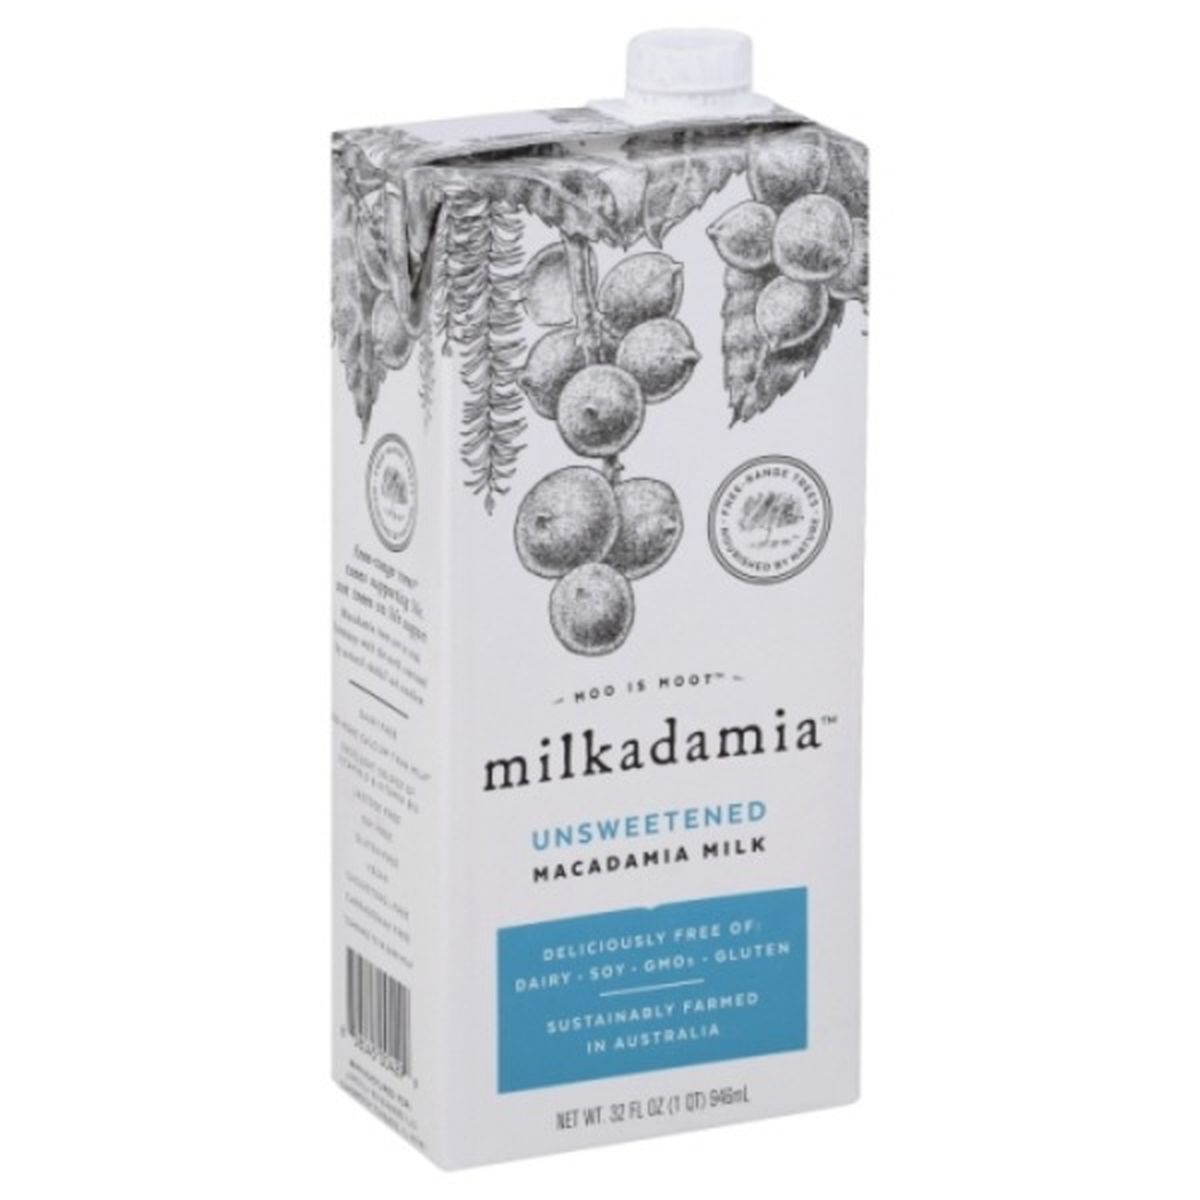 Calories in milkadamia Macadamia Milk, Unsweetened